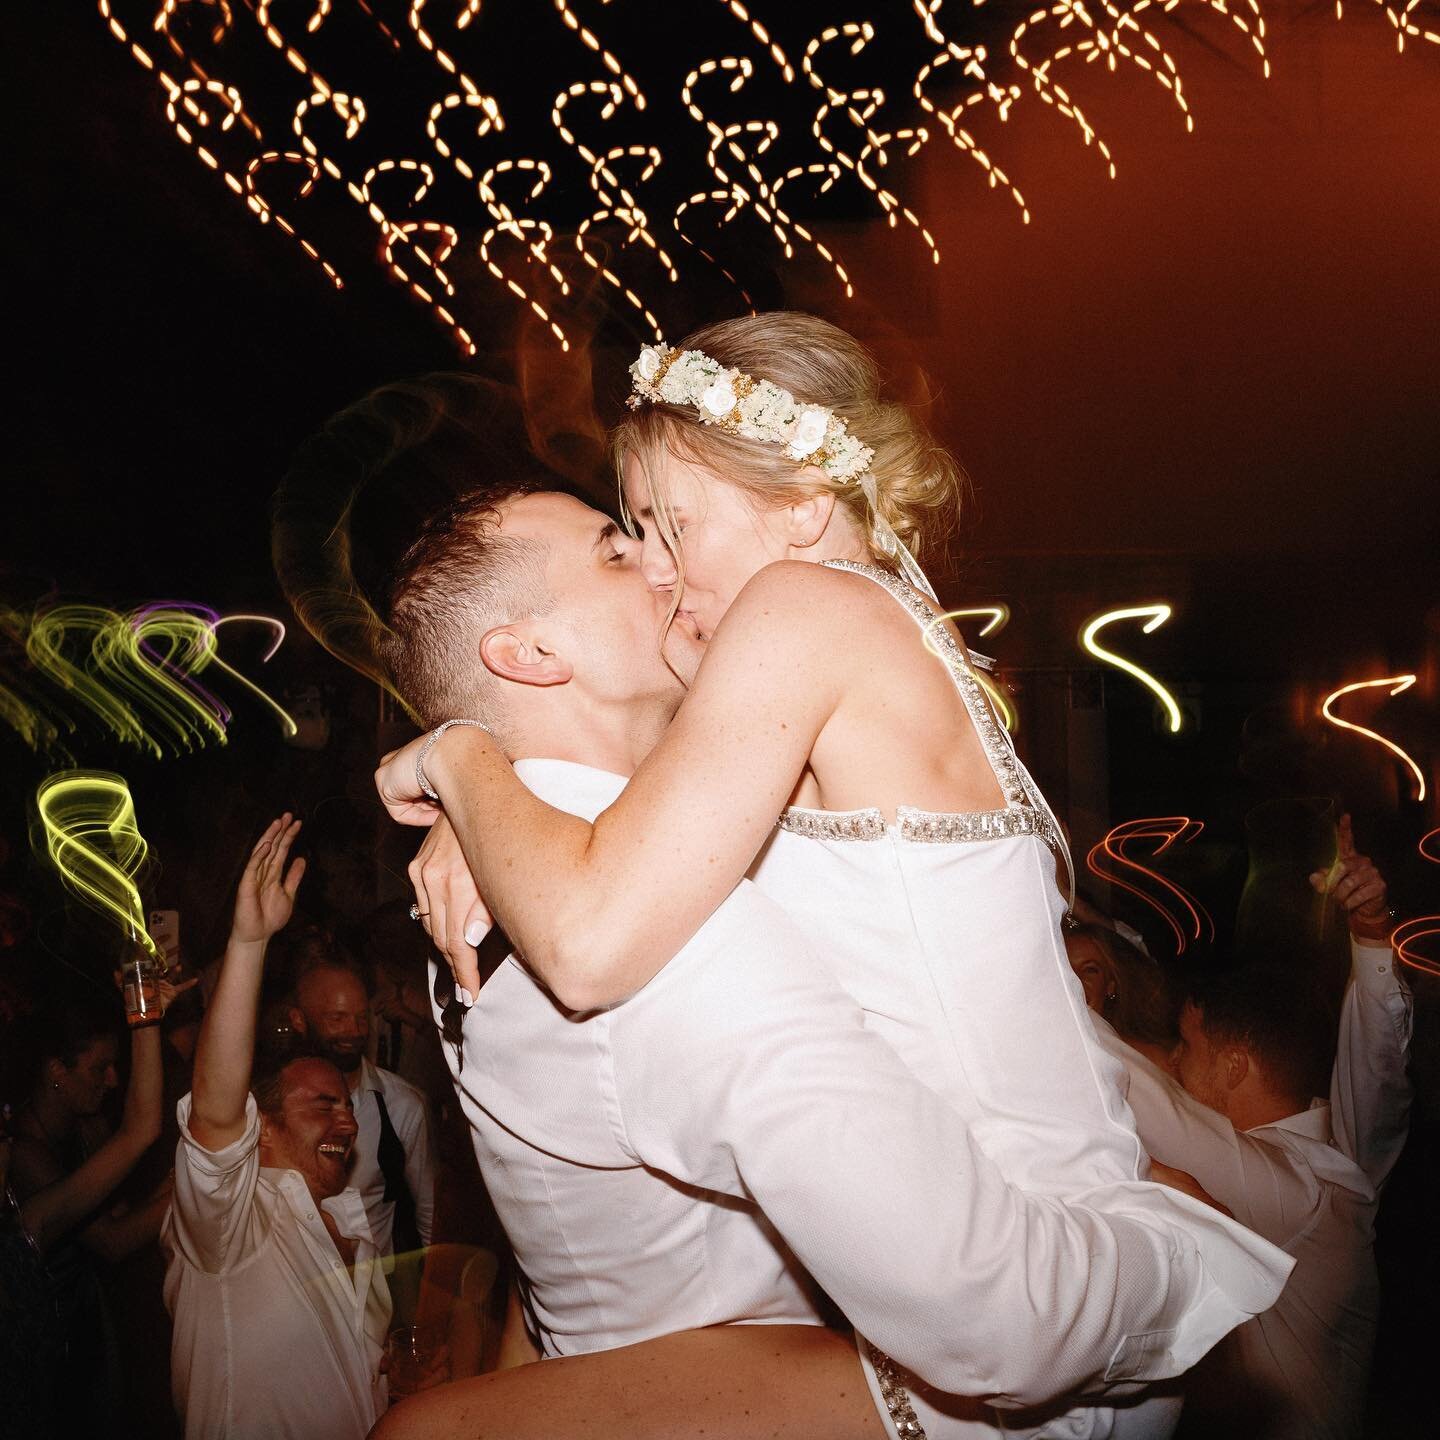 Did someone say party!?🎉

Video: @peppermint.weddingfilms 

#SanMiguelDeAllende #DestinationWedding #WeddingPhotography #CasateEnSanMiguel #Wedding #WeddingPhotos #Boda #FotosDeBoda #WeddingPhotographer #BeautifulWedding #WeddingDay #Wedding #Bride 